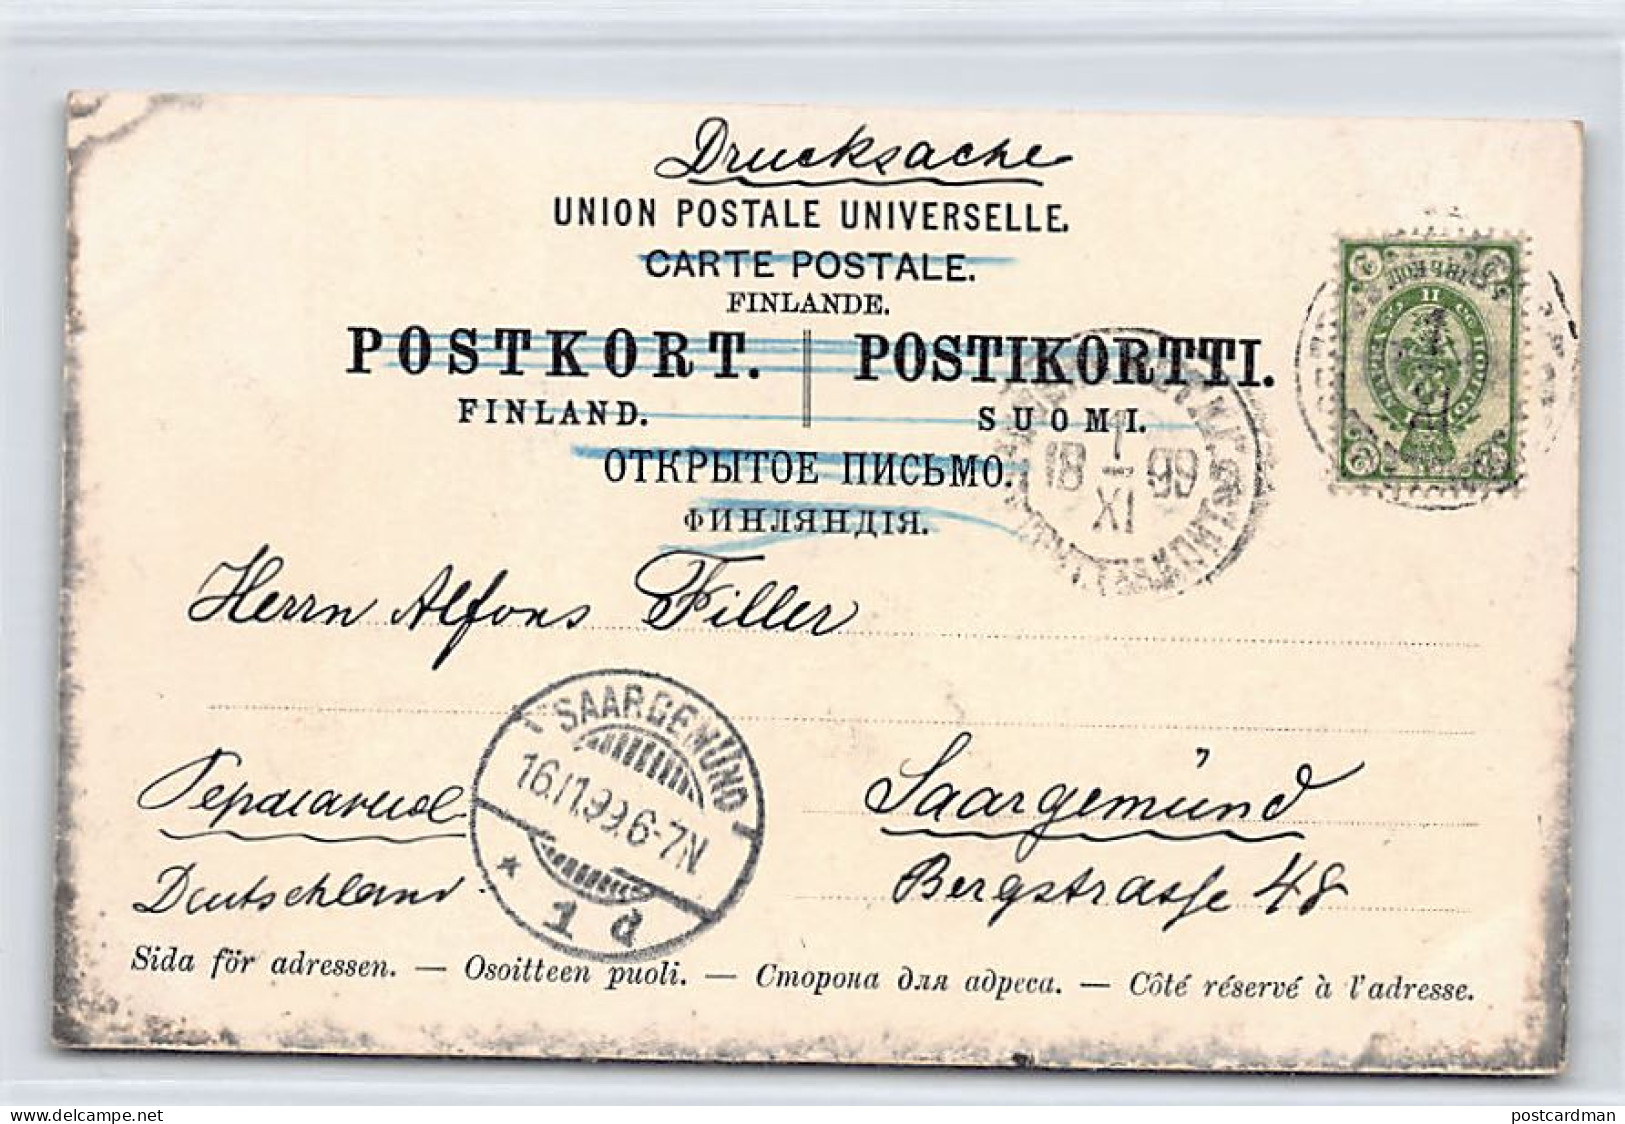 Finland - HELSINKI - Litho Postcard - Year 1899 - Publ. Unknown  - Finland